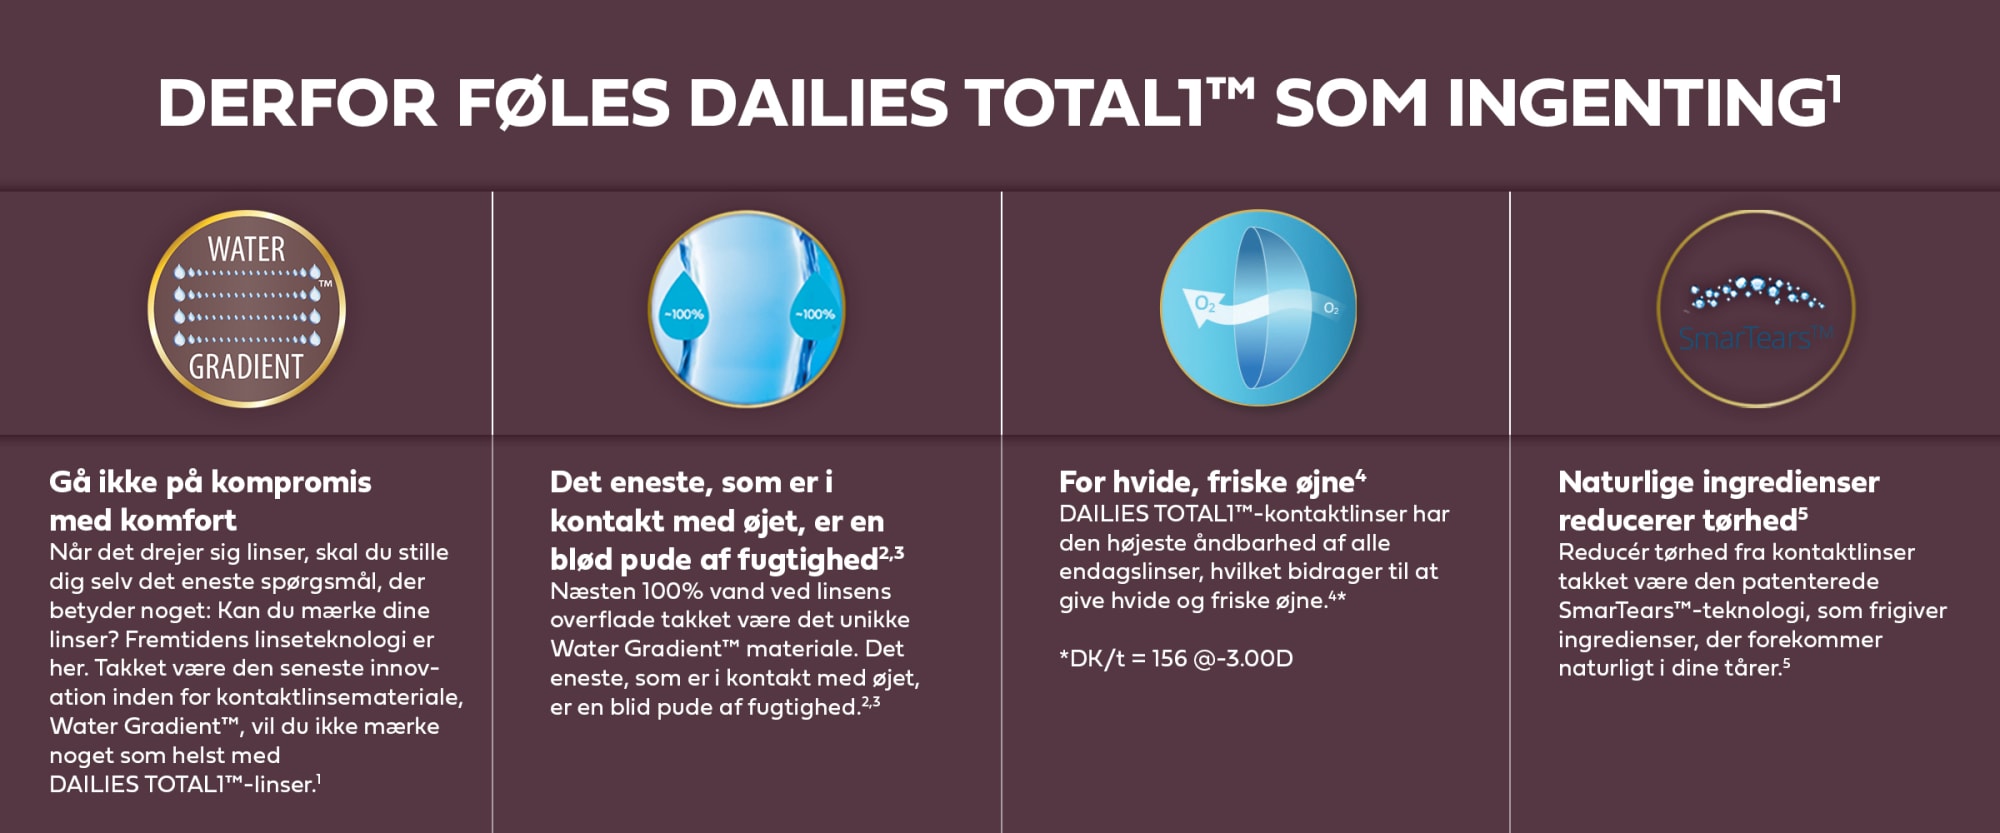 Informationspjece om Dailies Total1.